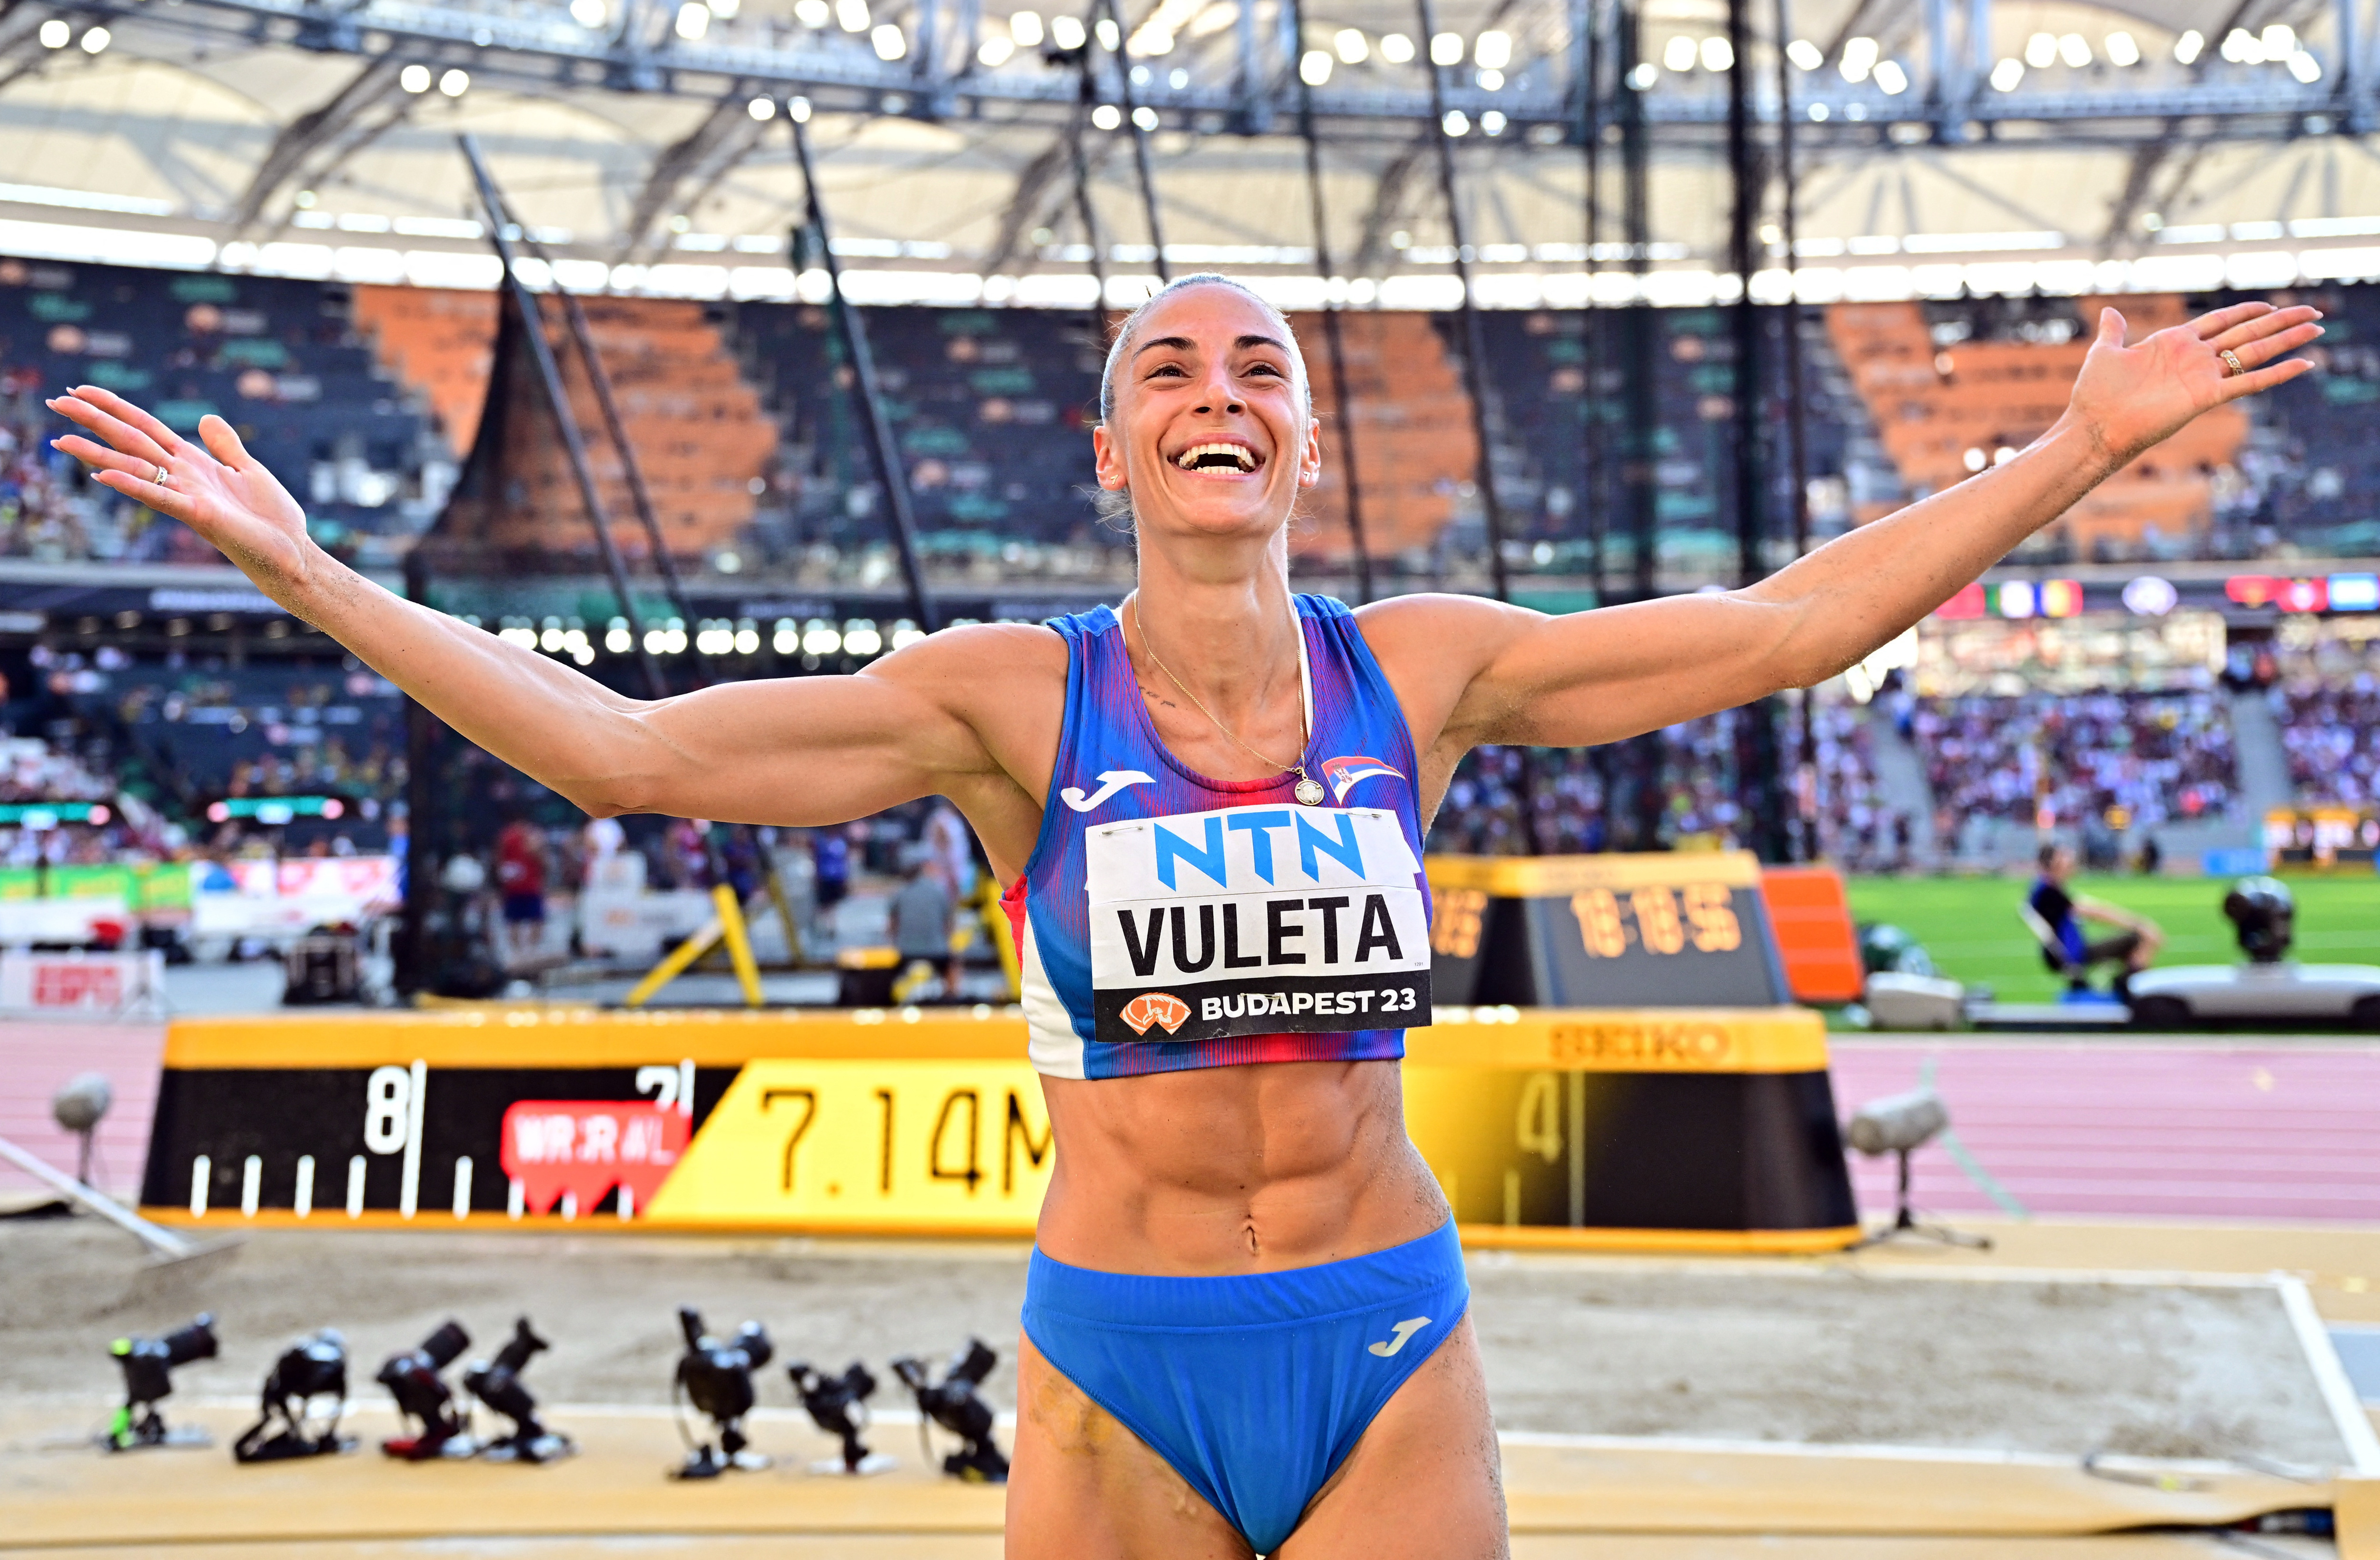 Serbia's Vuleta claims world long jump gold with season's best jump